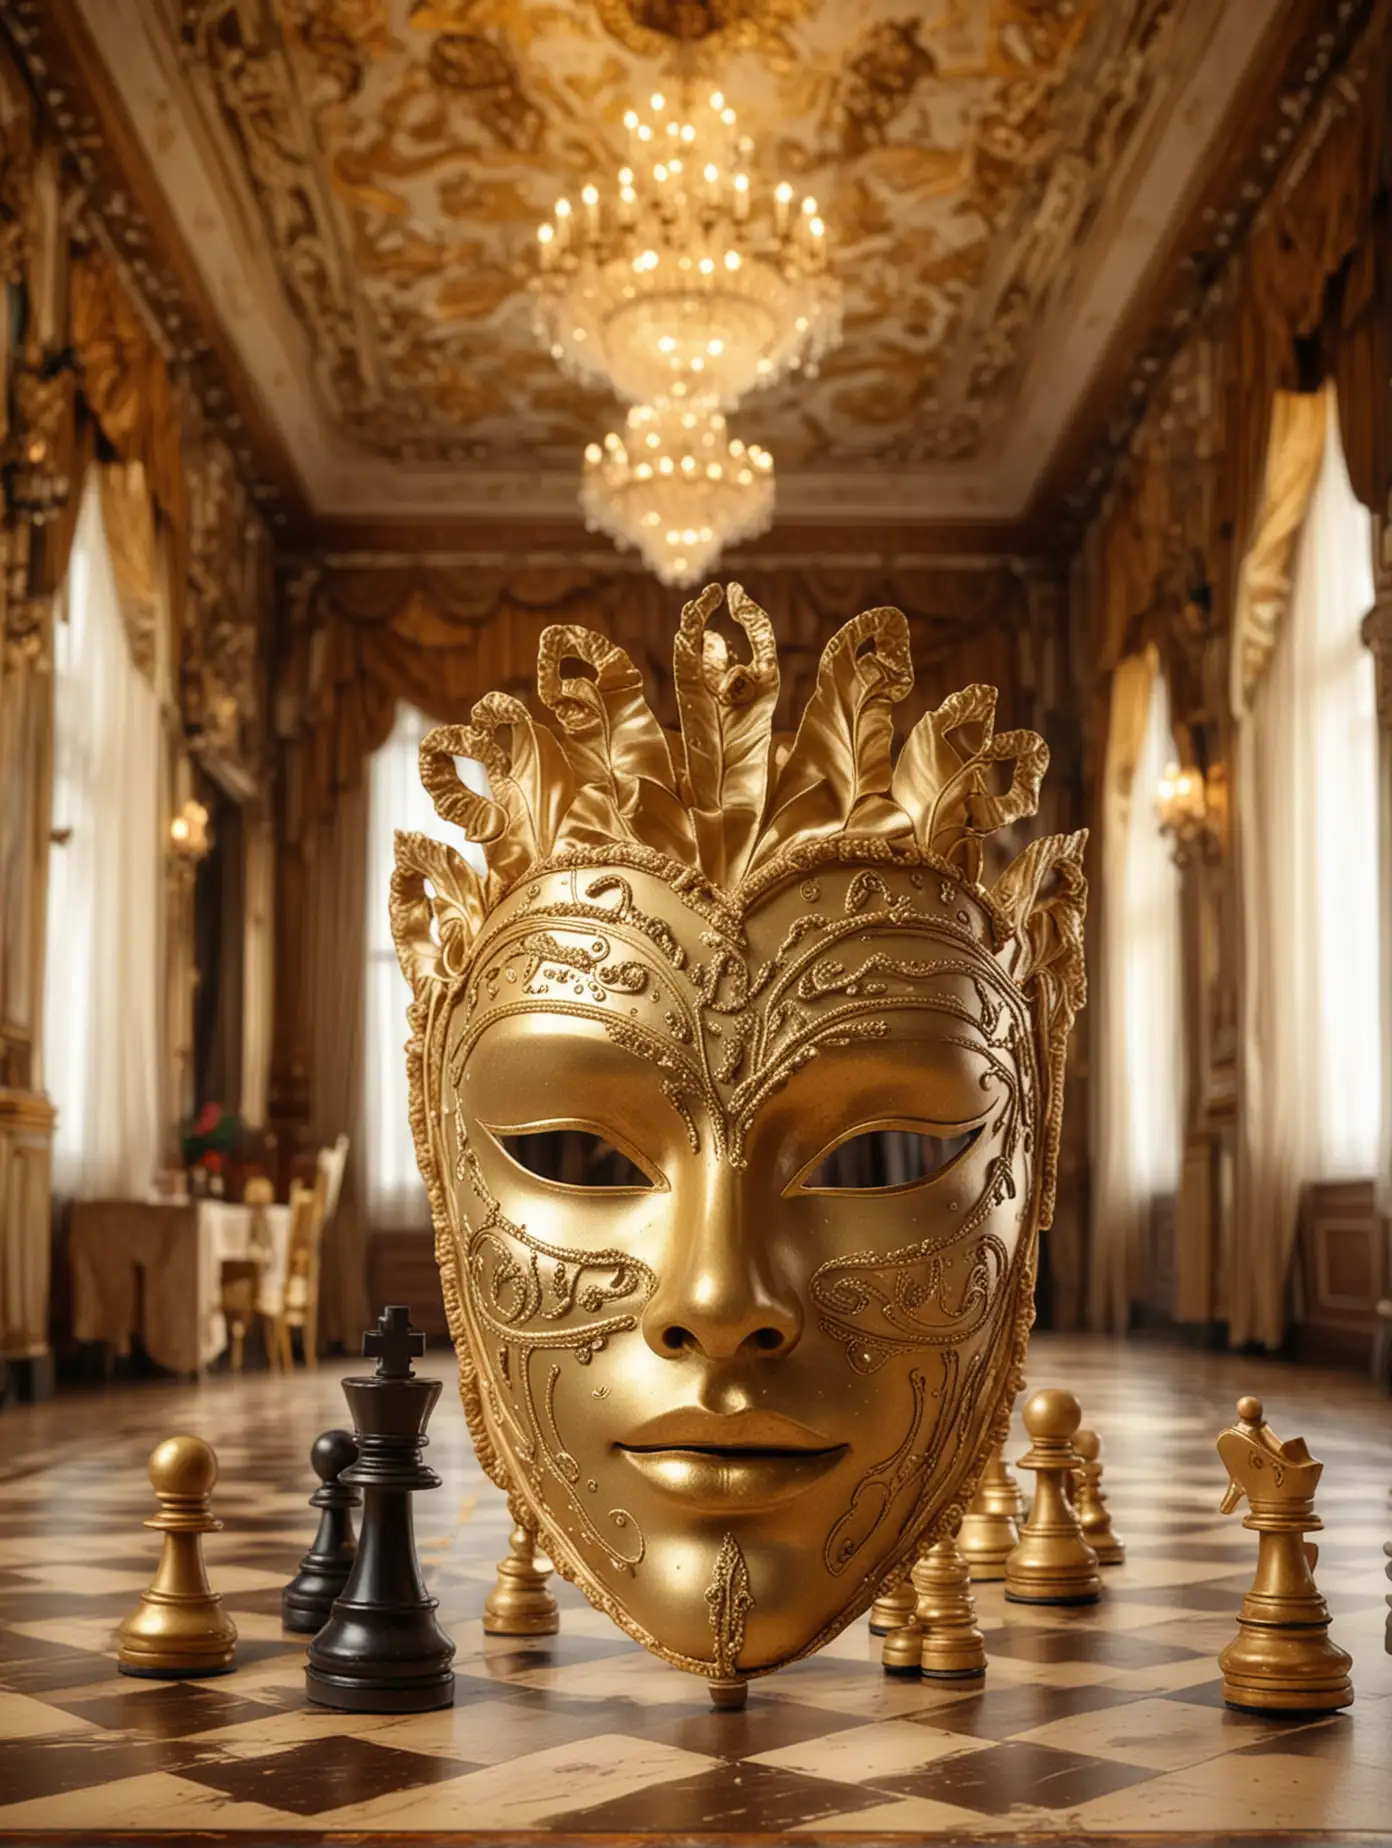 Golden-Carnival-Mask-in-Elegant-Ballroom-with-Chess-Theme